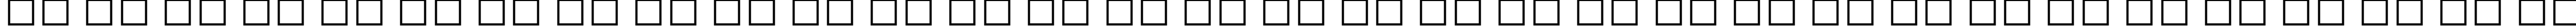 Пример написания русского алфавита шрифтом Tw Cen MT Bold Italic